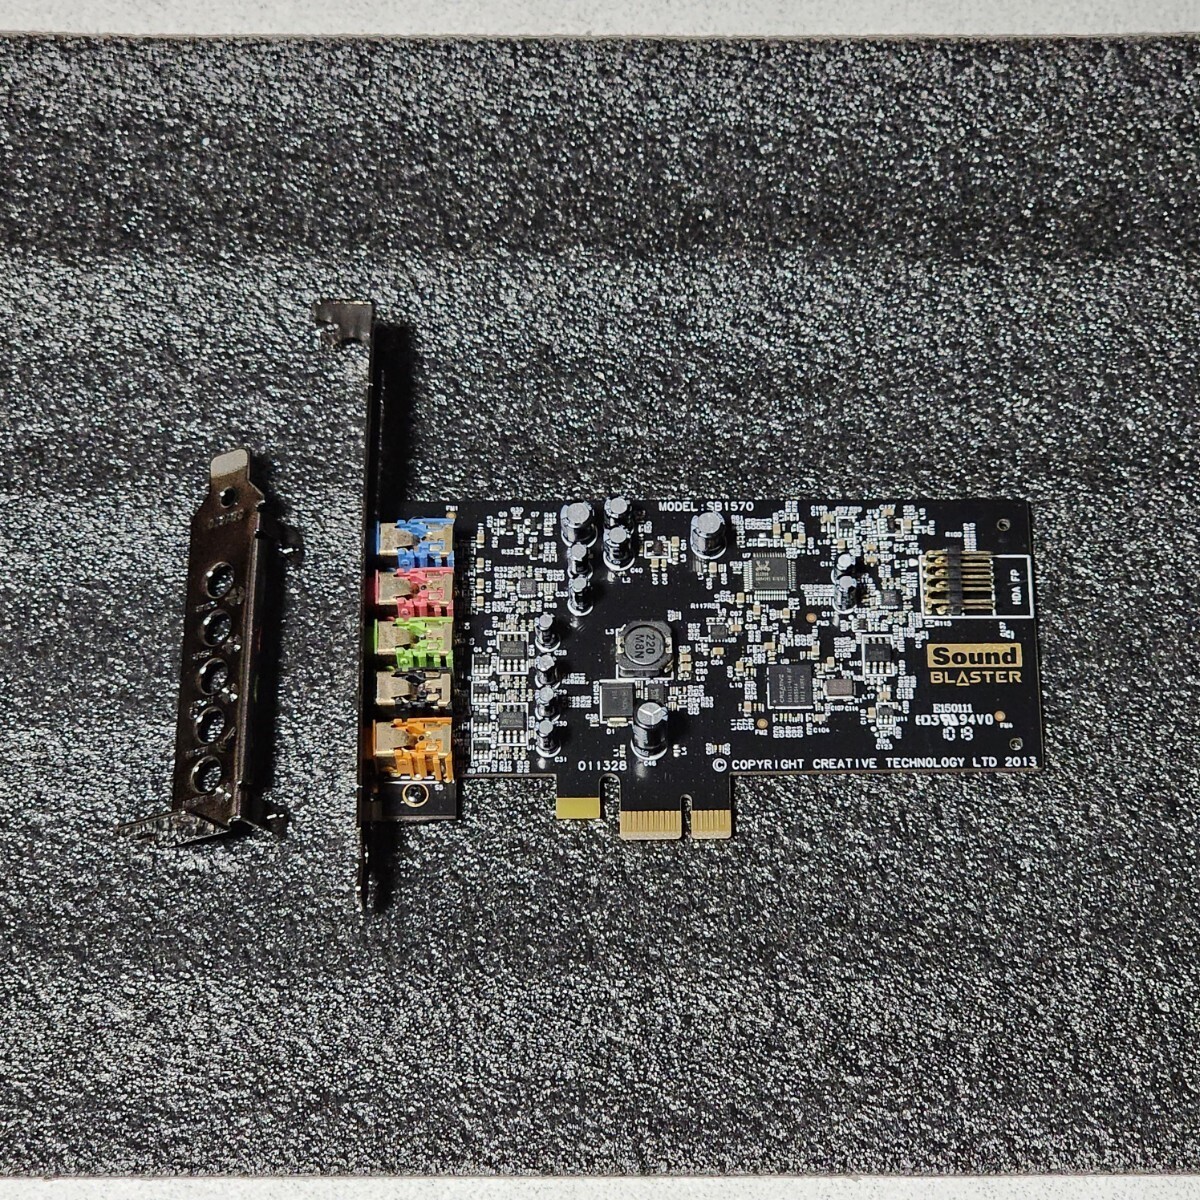 Creative SoundBlaster Audigy Fx SB1570 サウンドカード PCIExpless×1 動作確認済み PCパーツ クリエイティブ (2)_画像1